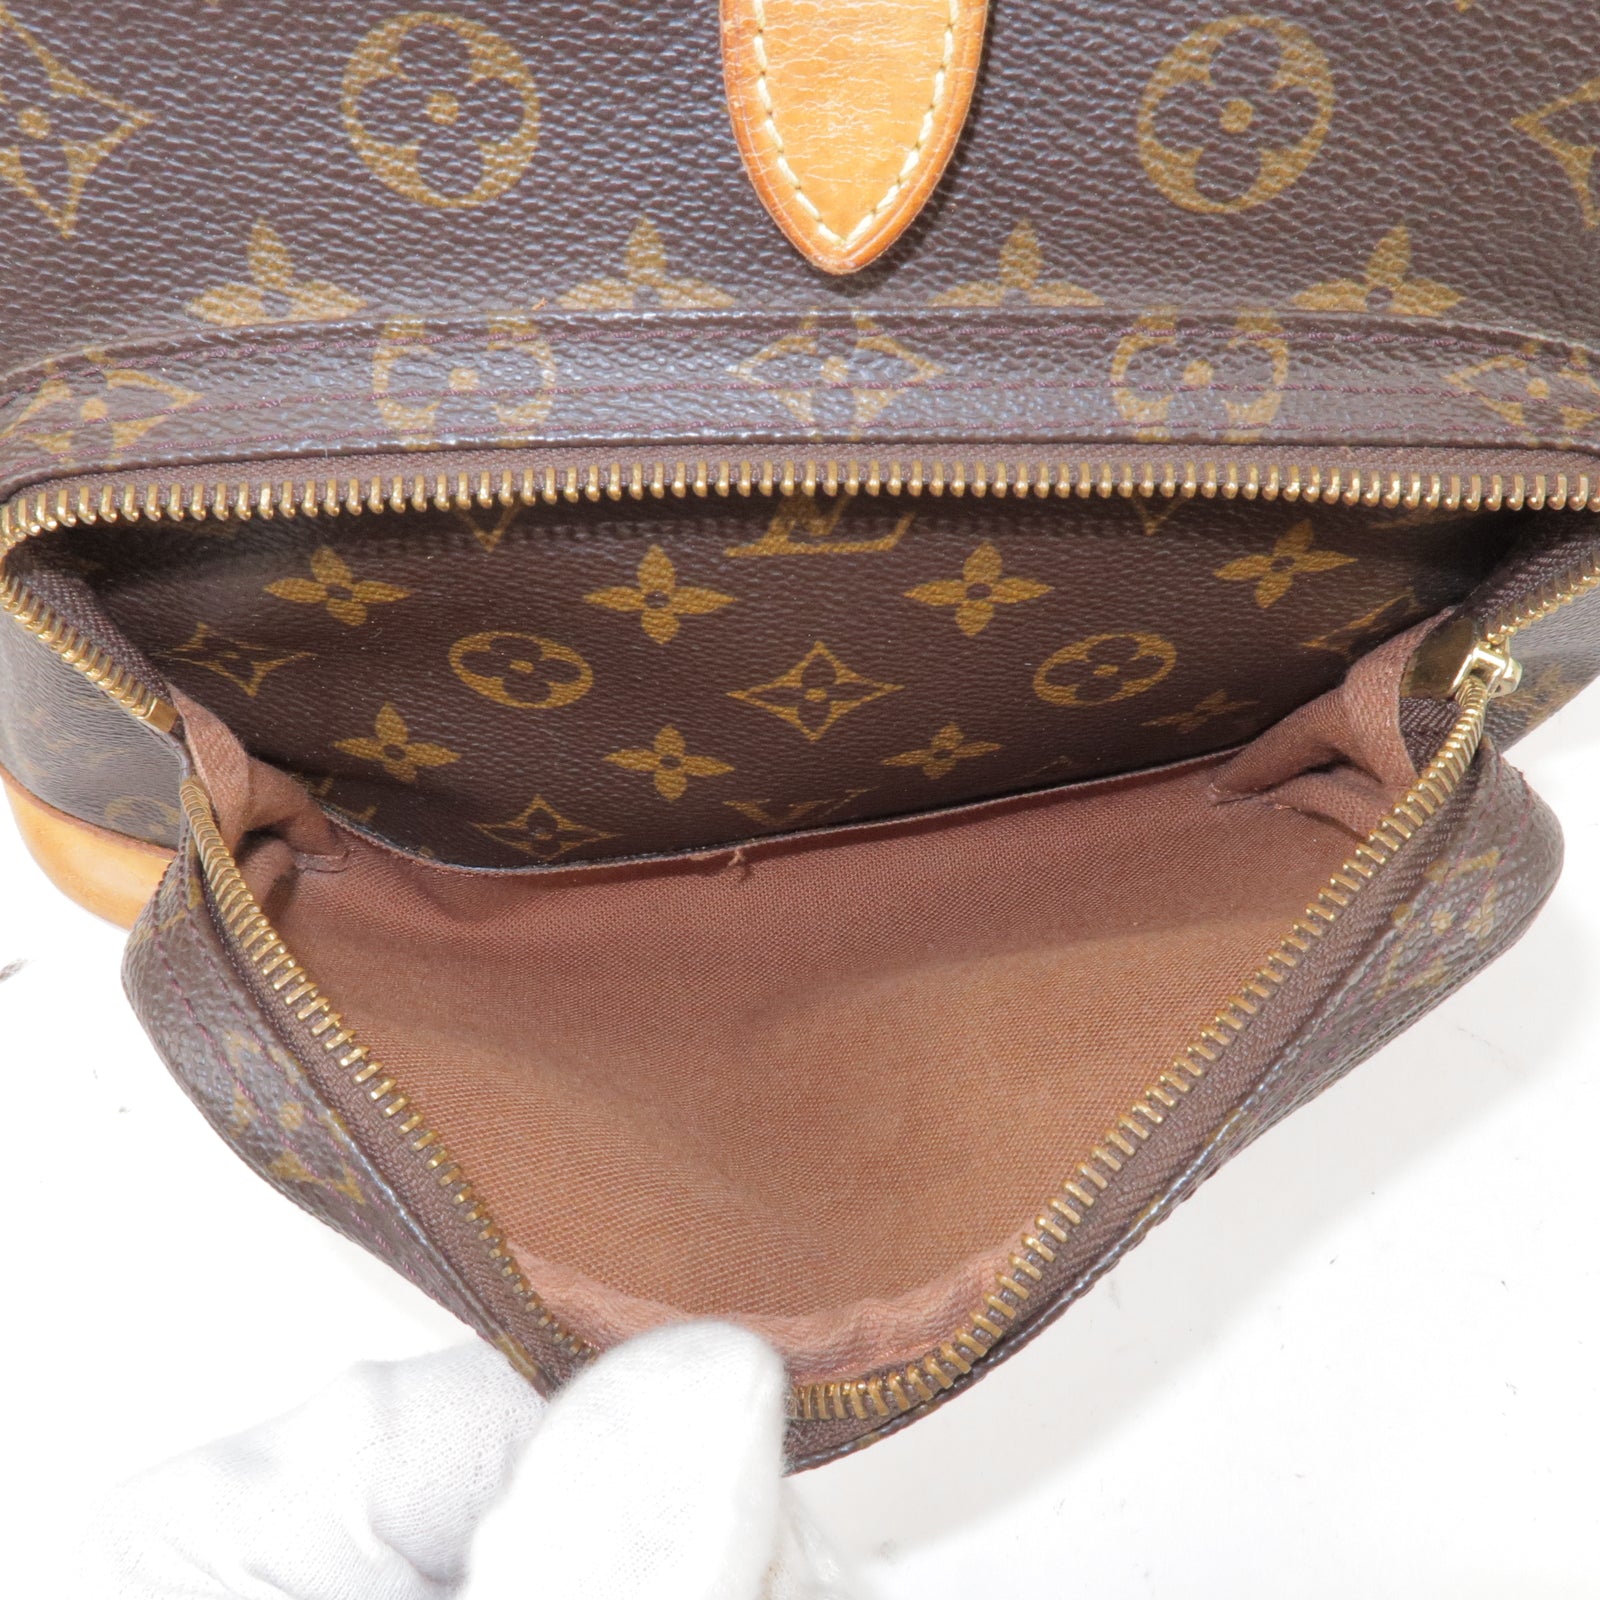 Louis Vuitton 2011 Pre-owned Monogram Speedy 30 Handbag - Brown